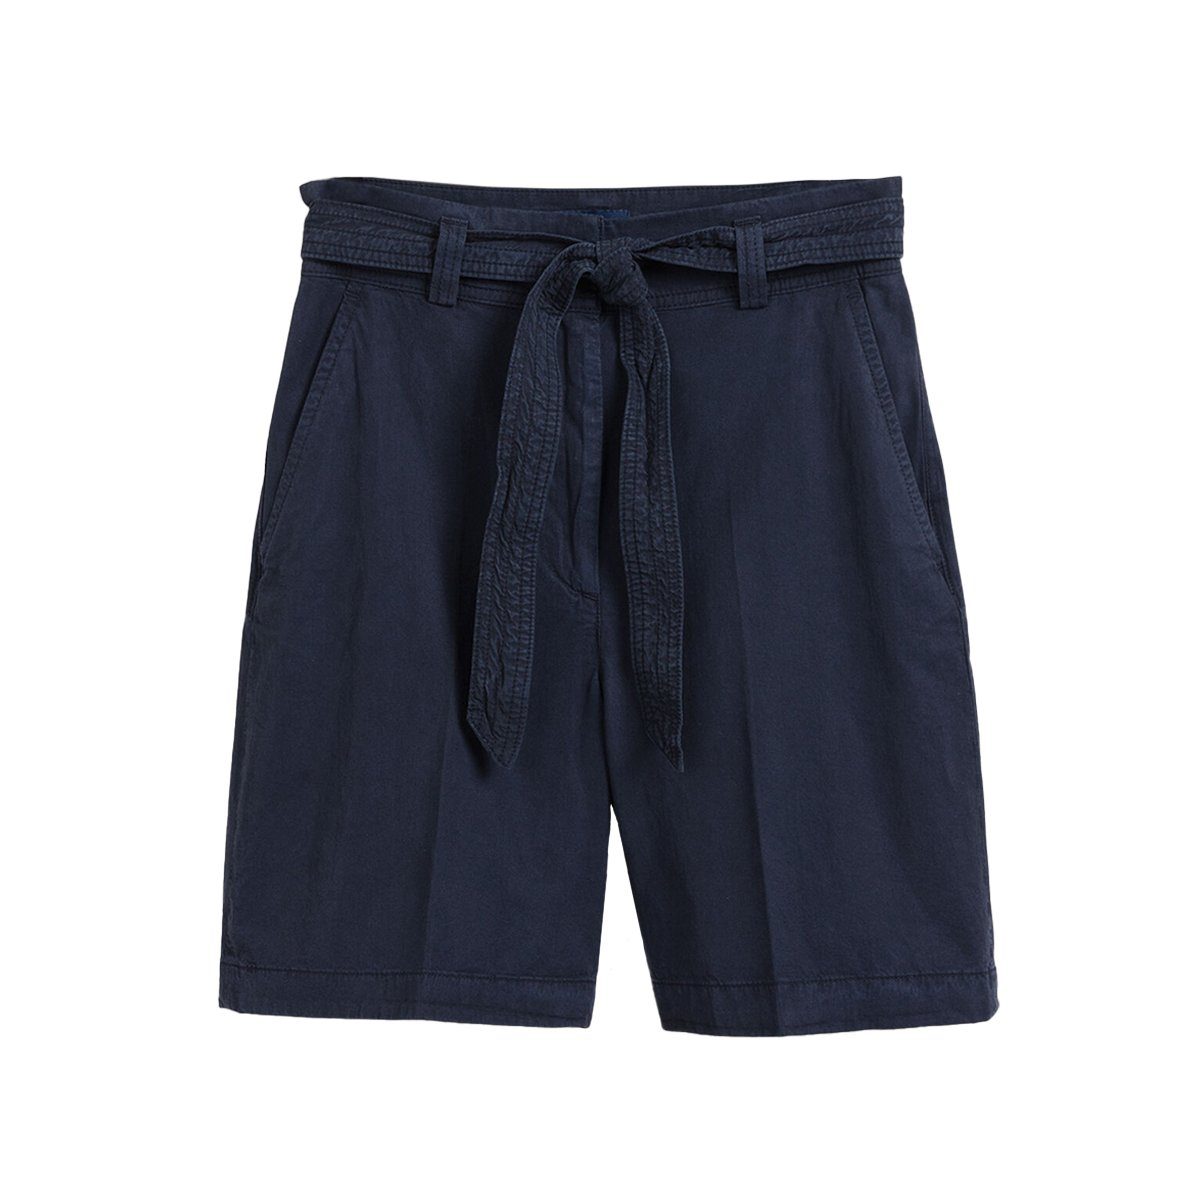 Gant Shorts 4020064 Damen Fluid Shorts mit Bindegürtel Blau(433)